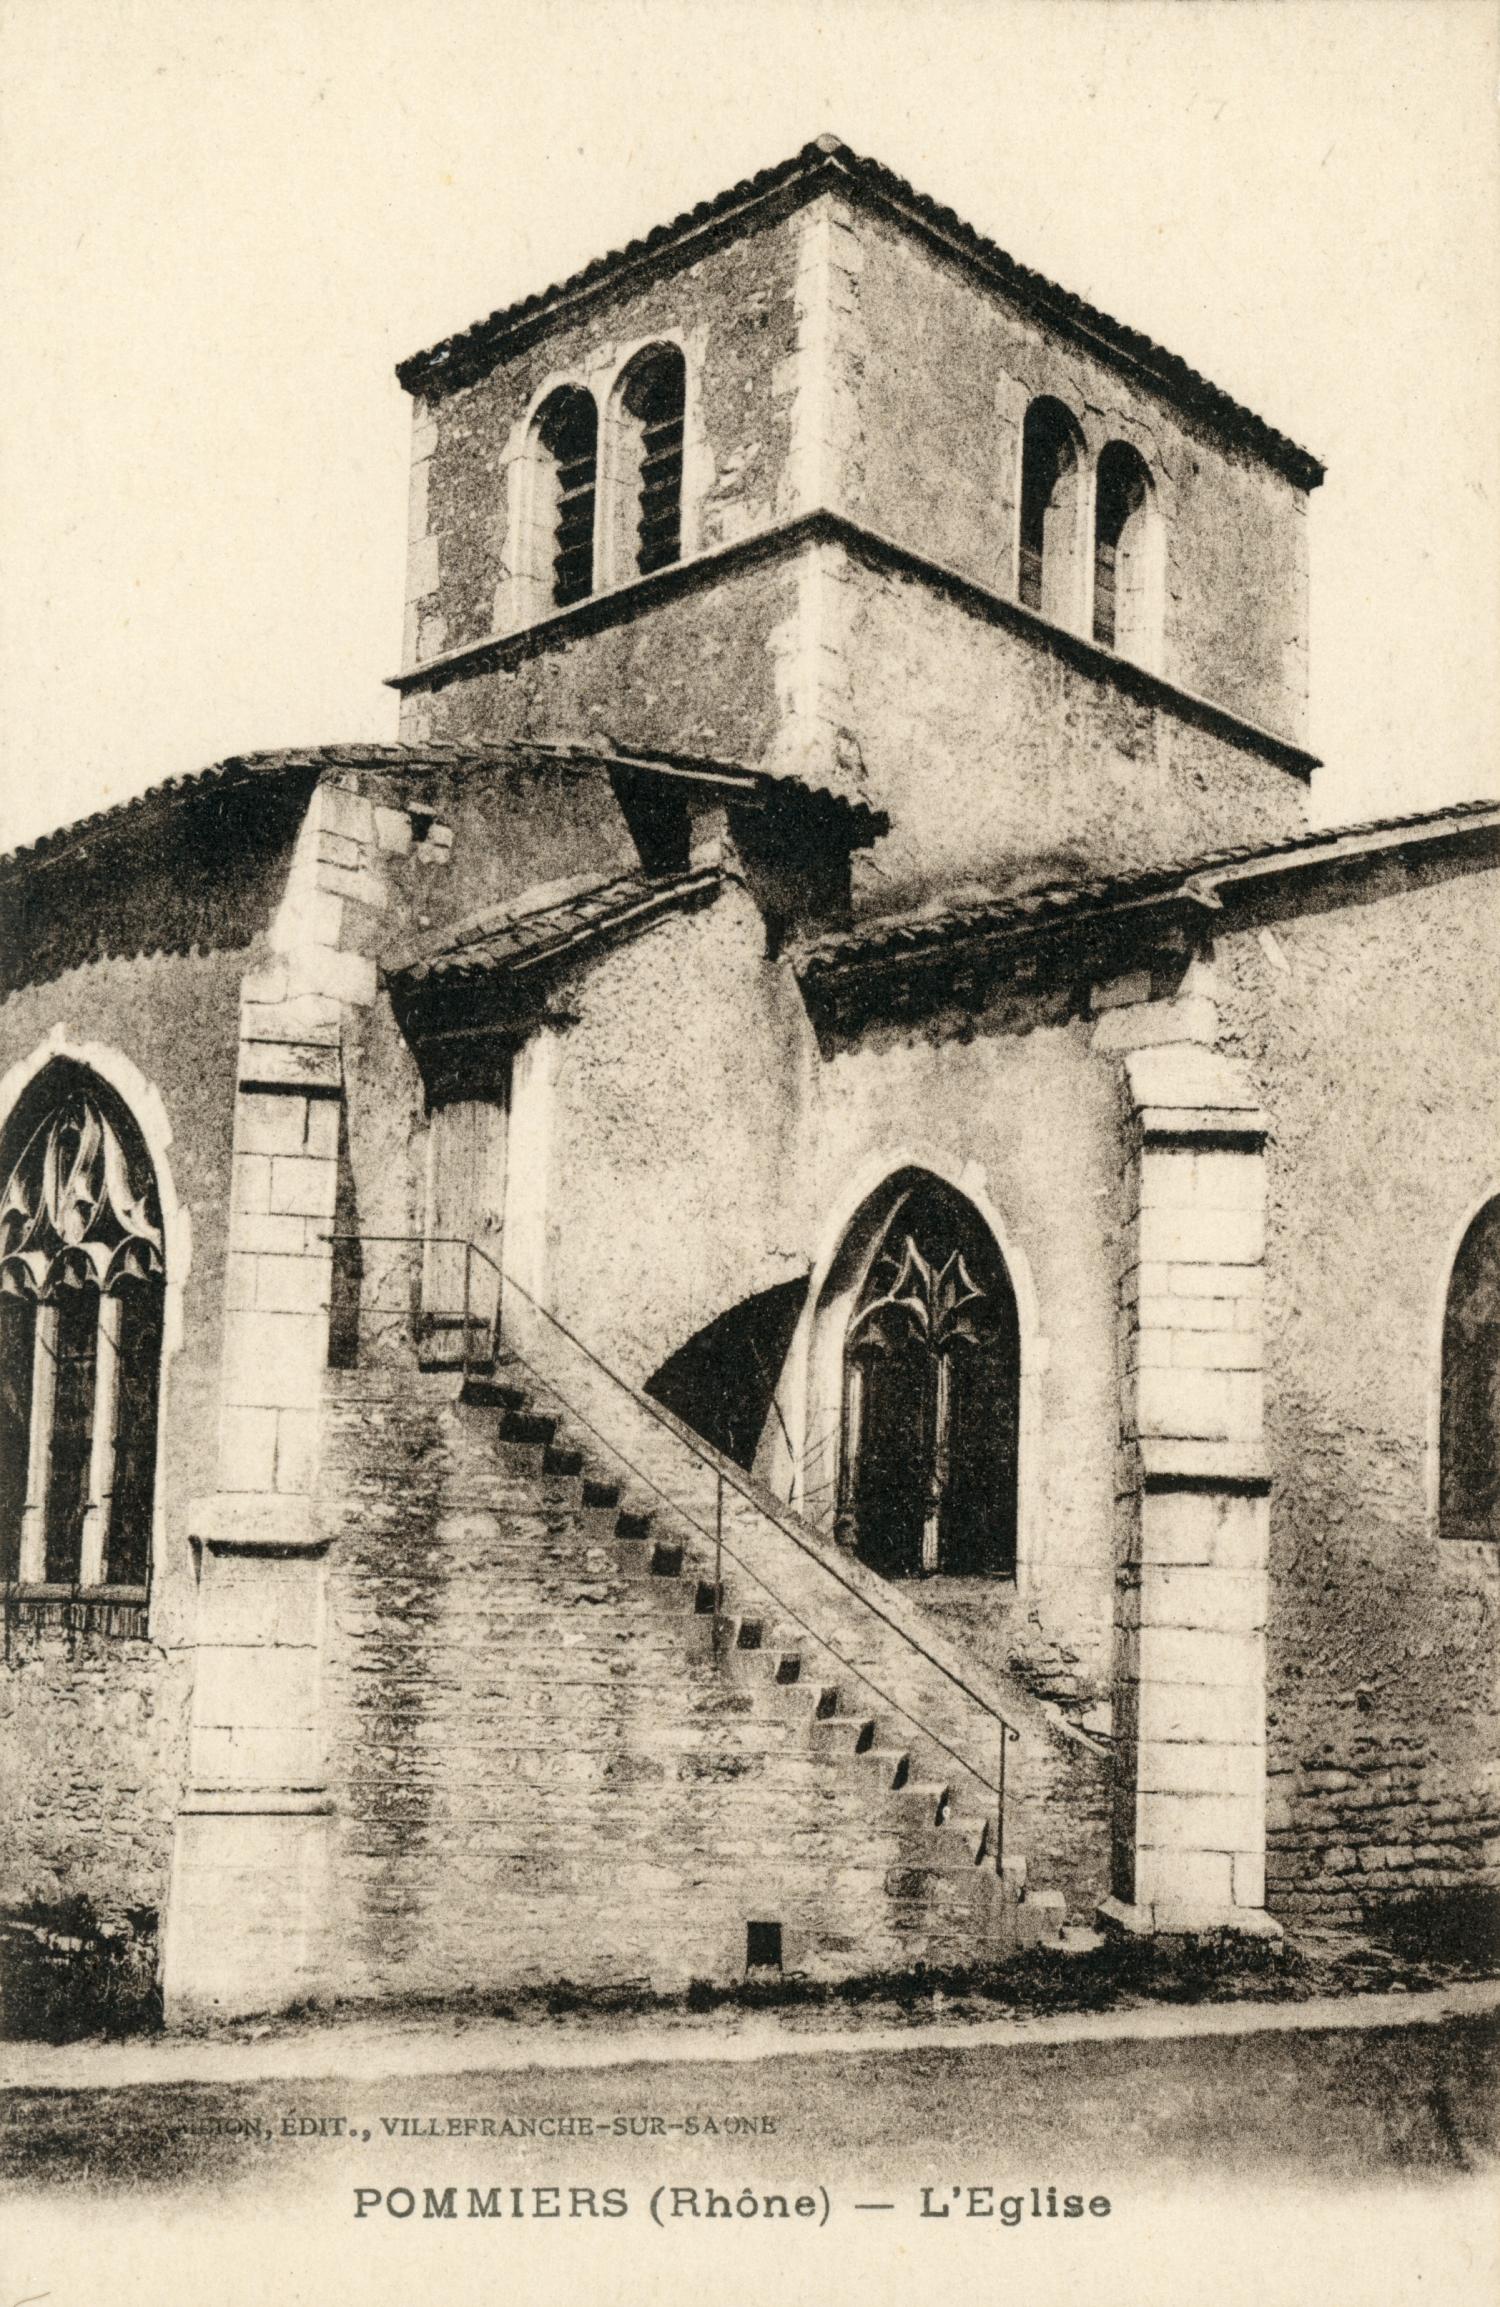 Pommiers (Rhône). - L'Eglise